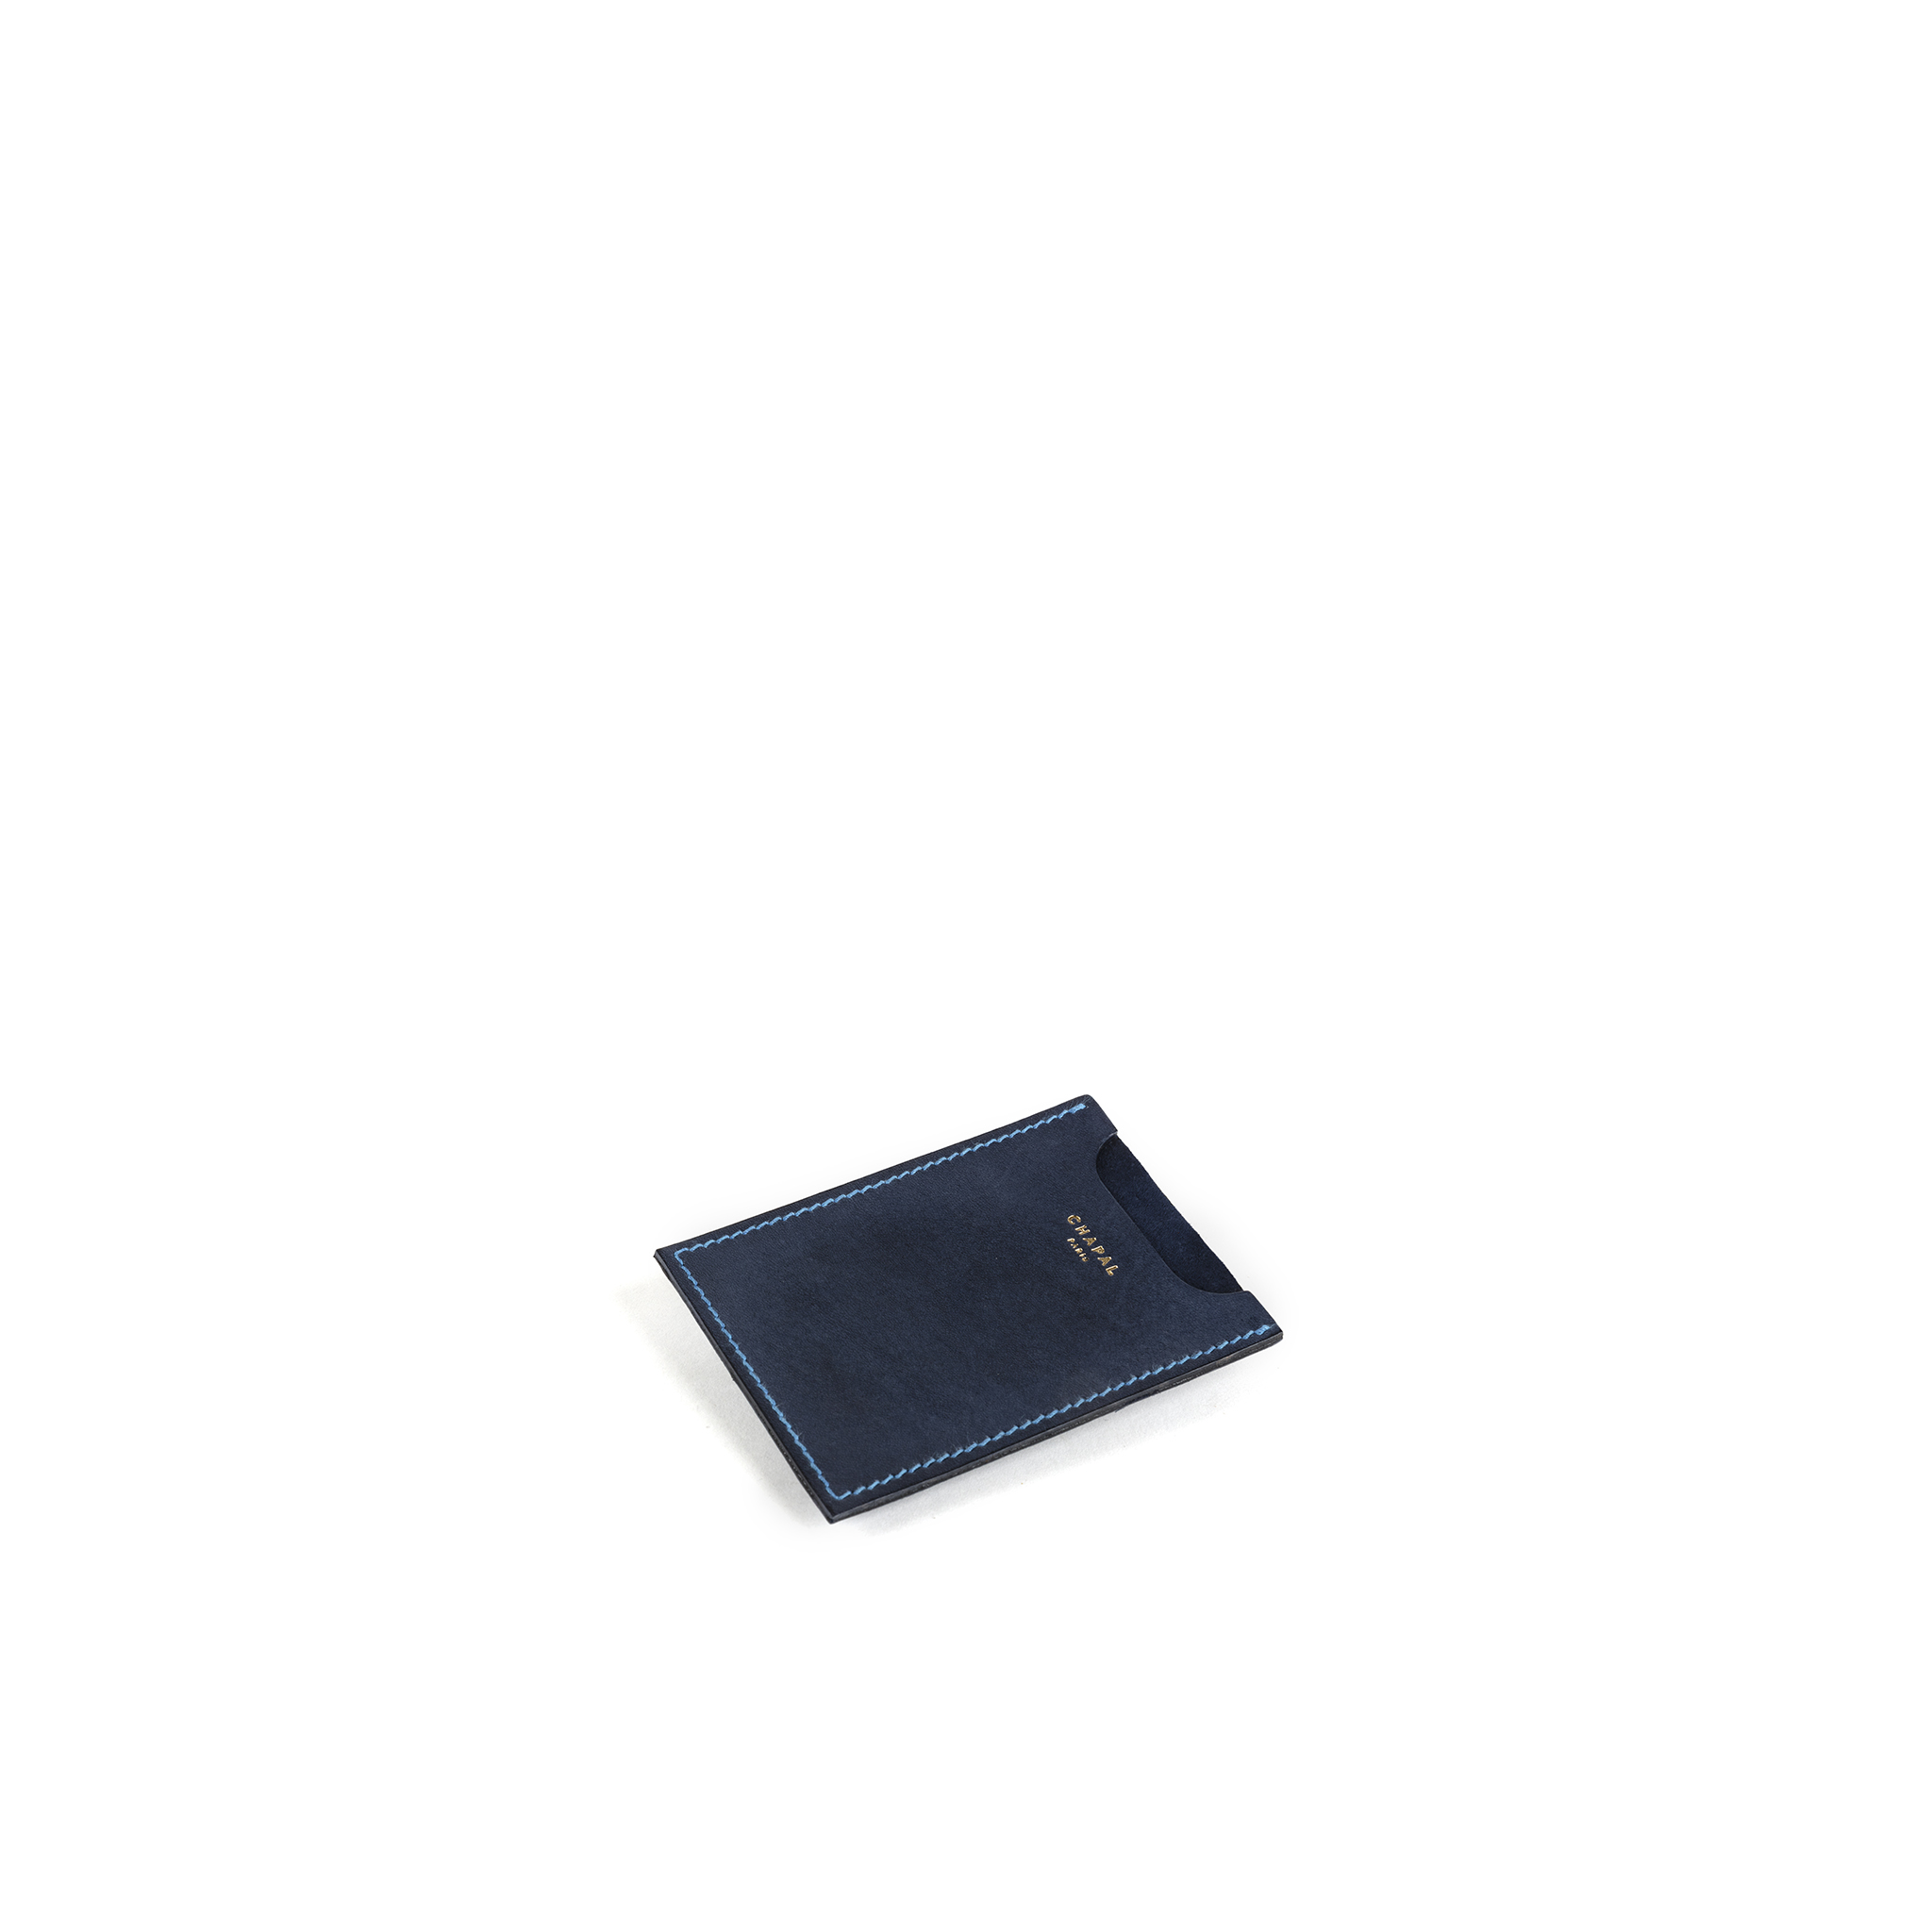 Card Holder - Vegetable tanned leather - Blue color